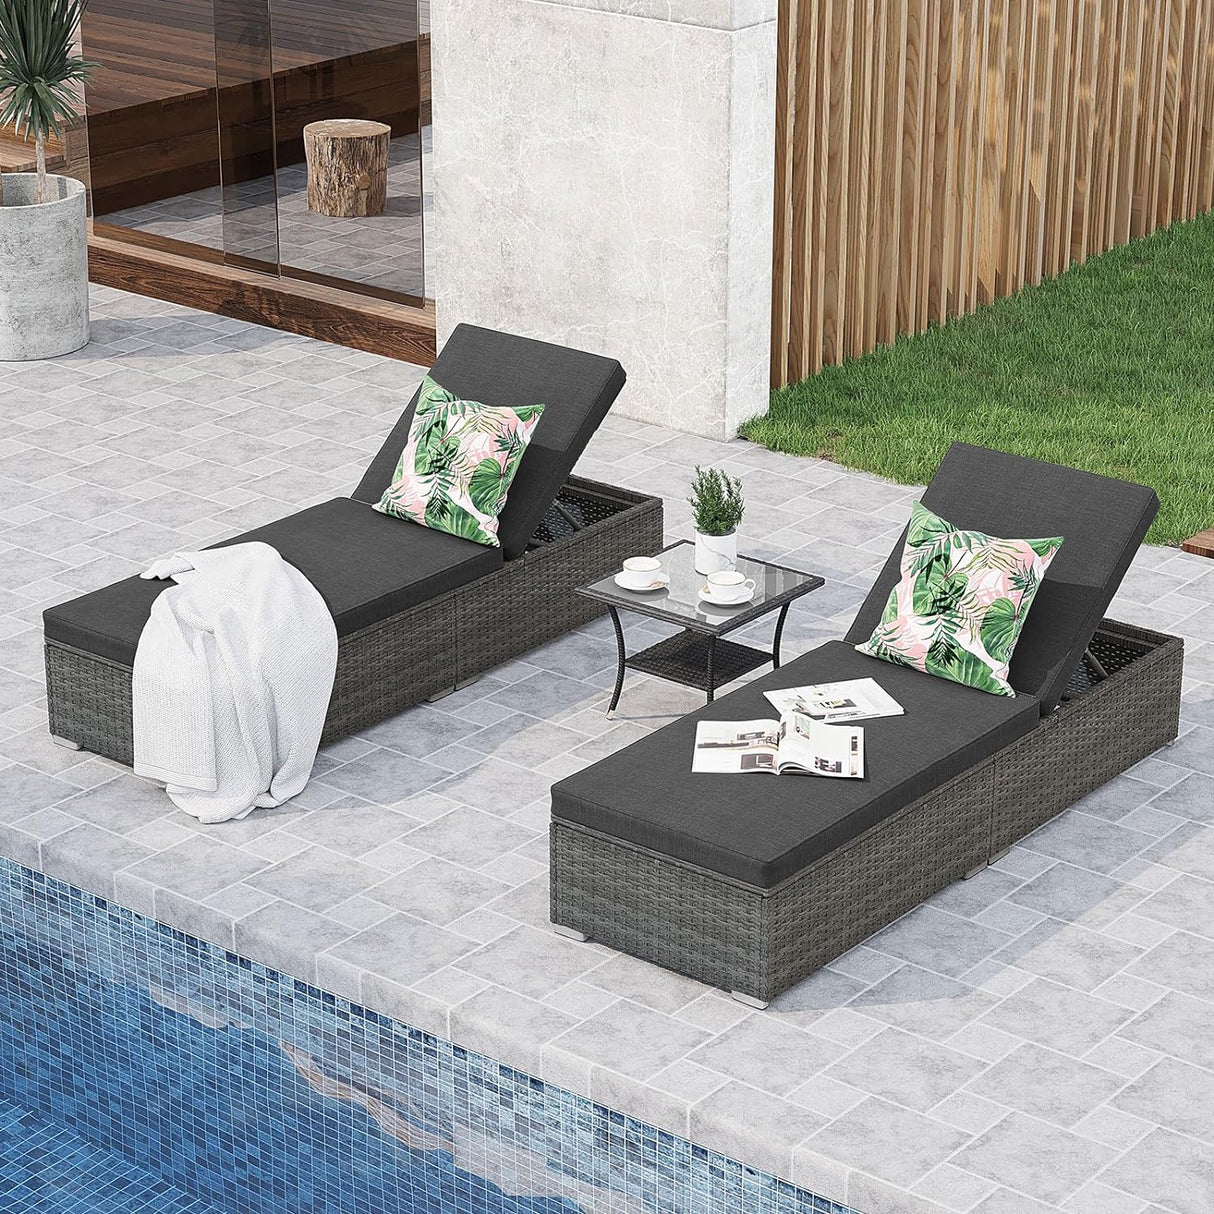 3 Piece Patio Pool Lounge Chairs